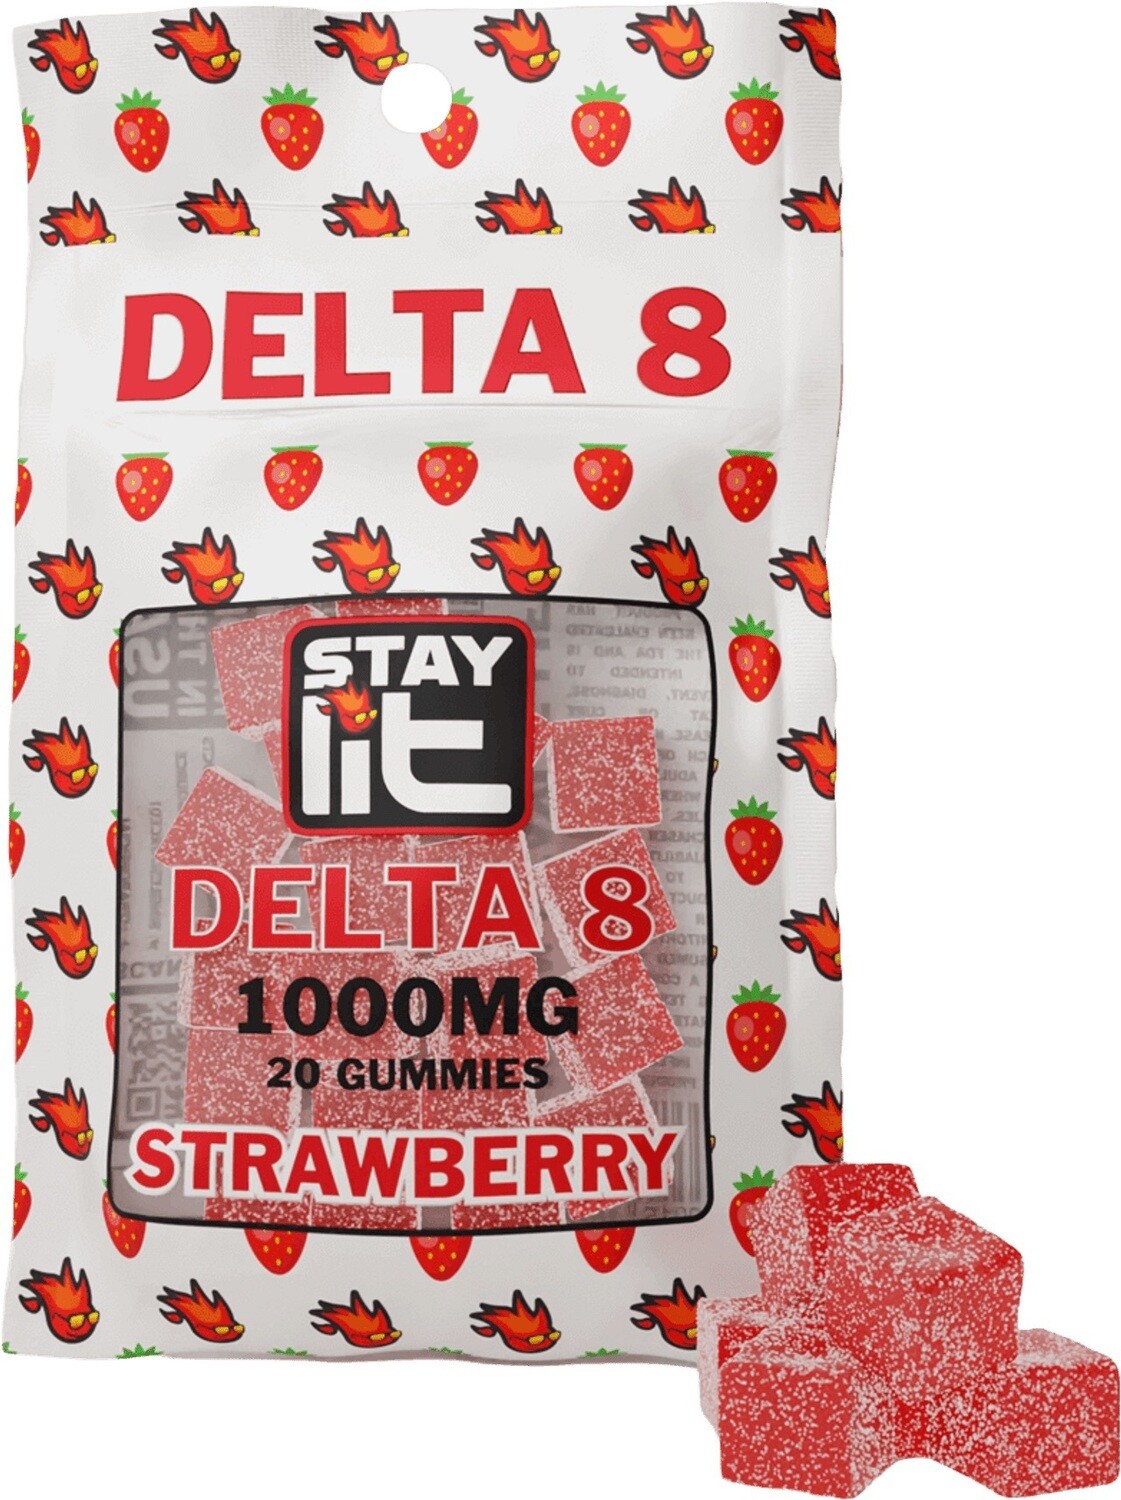 Stay Lit Chews Delta 8 Strawberry 1000mg Edible